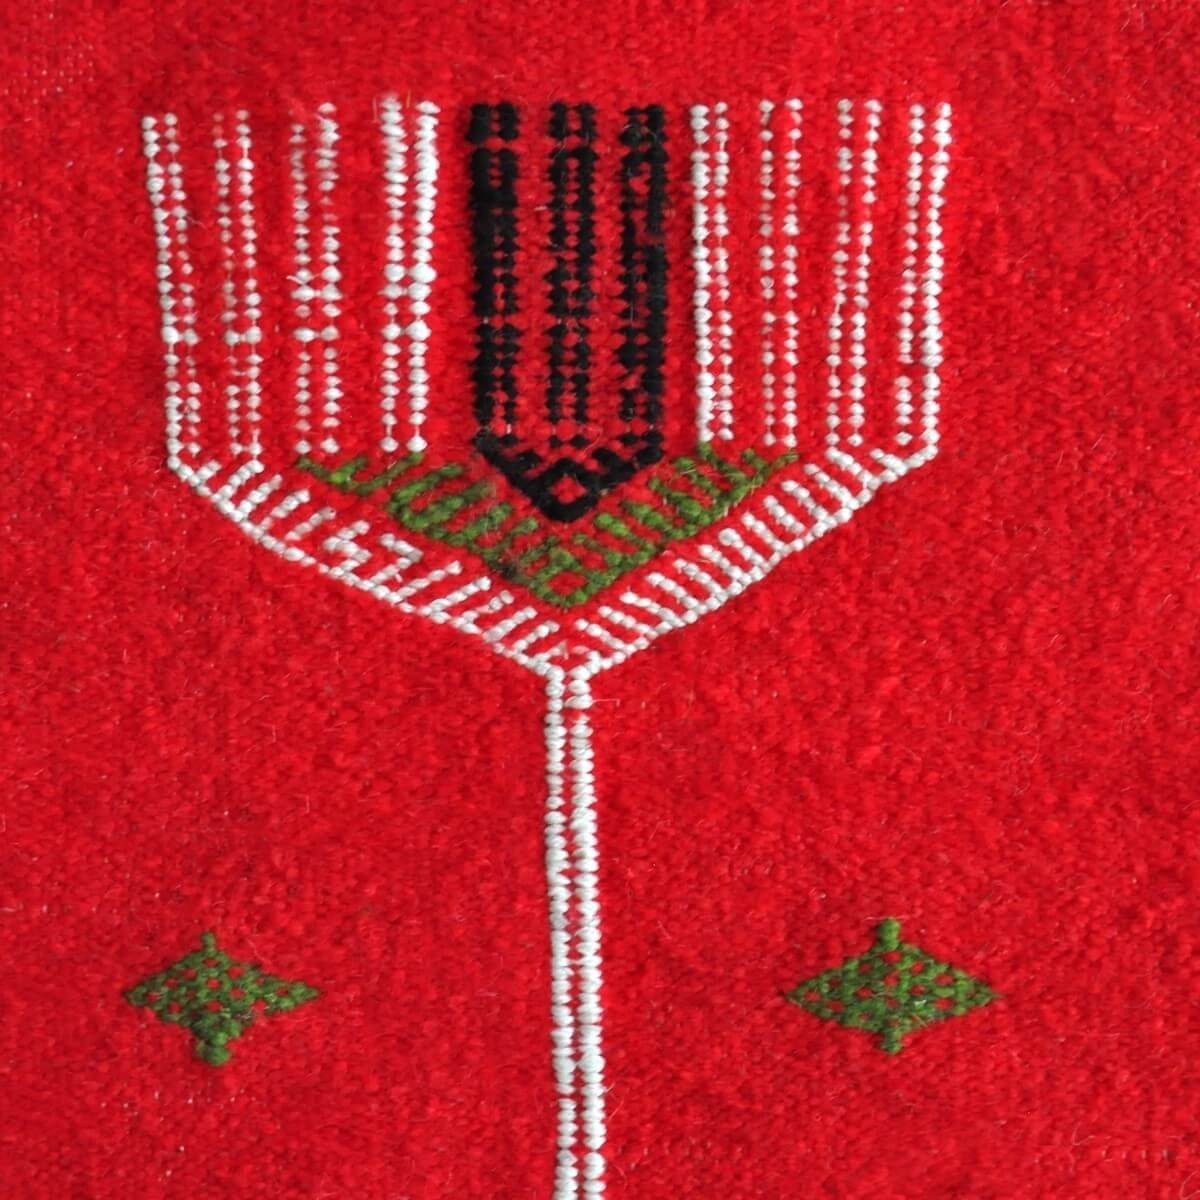 Tapete berbere Tapete Kilim longo Bou Arada 65x220 Vermelho (Tecidos à mão, Lã, Tunísia) Tapete tunisiano kilim, estilo marroqui